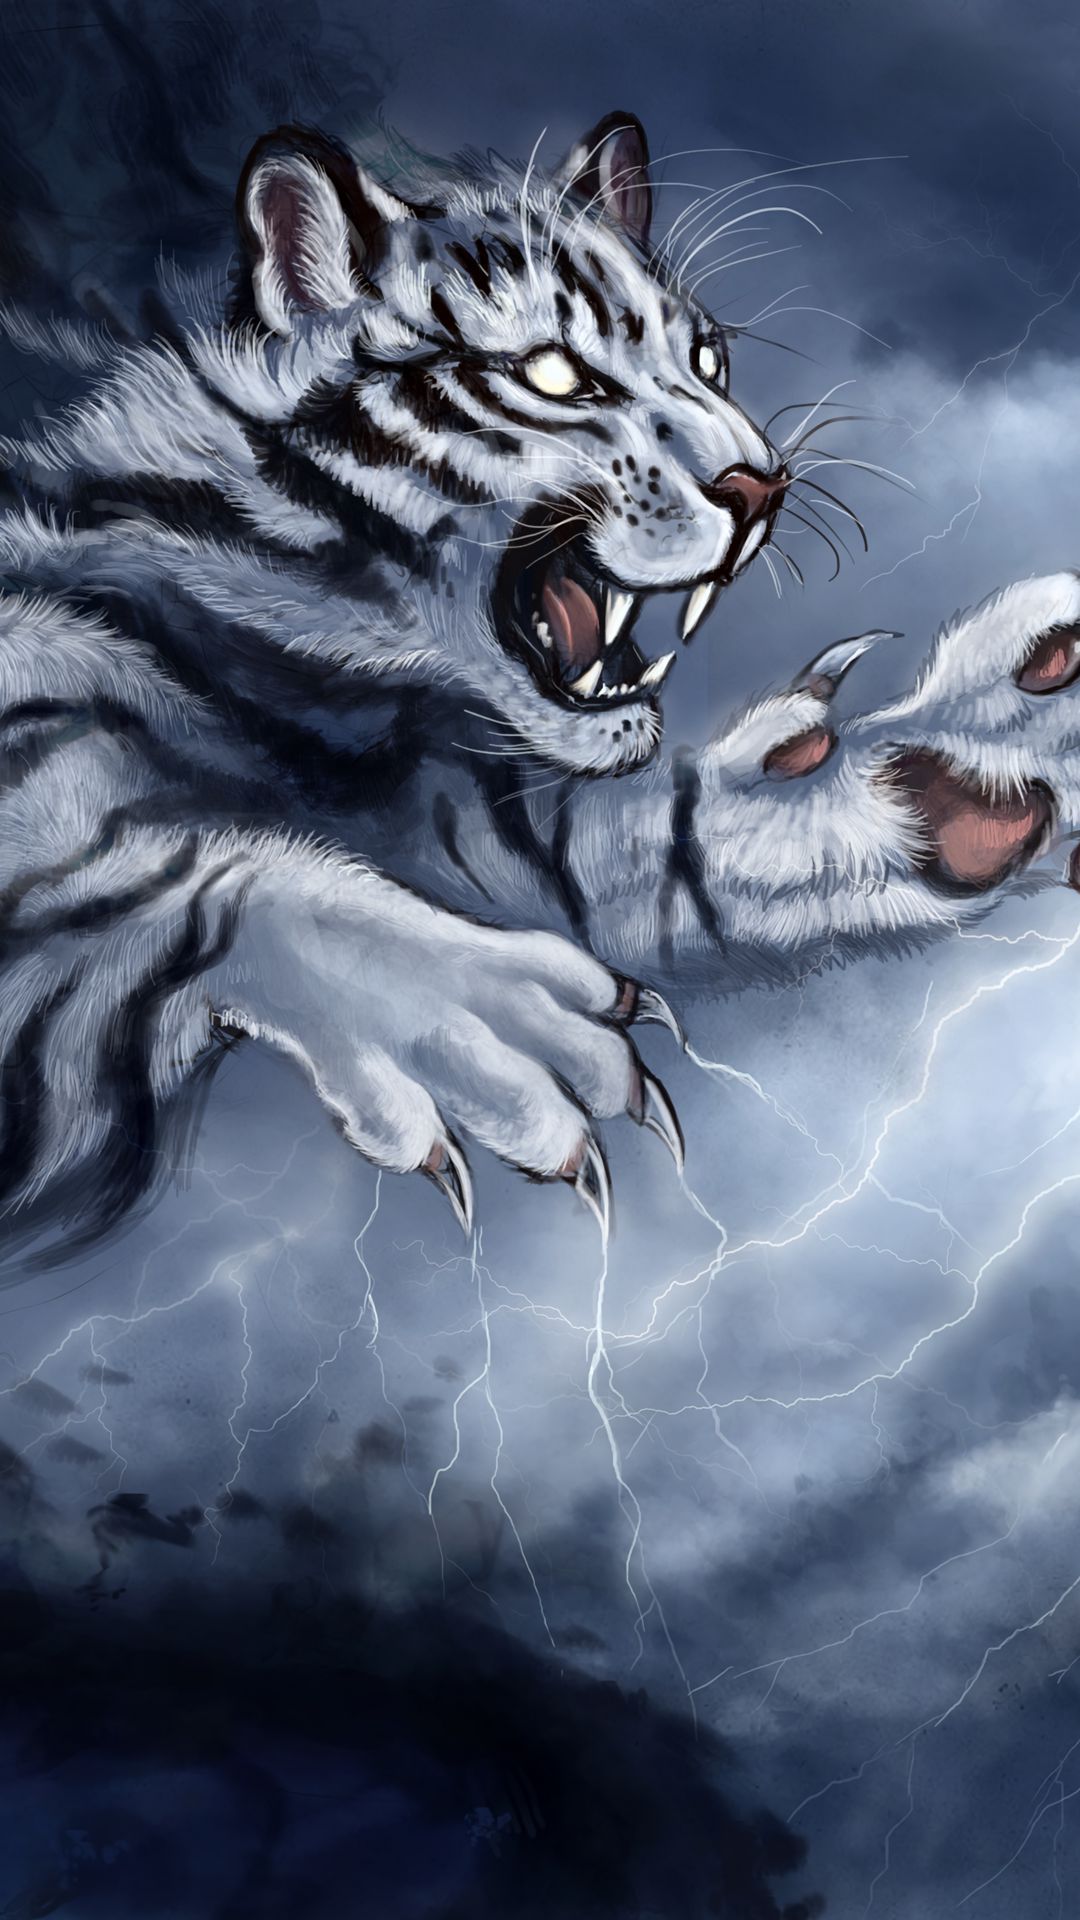 Download wallpaper 1080x1920 tiger, grin, art, predator, claws